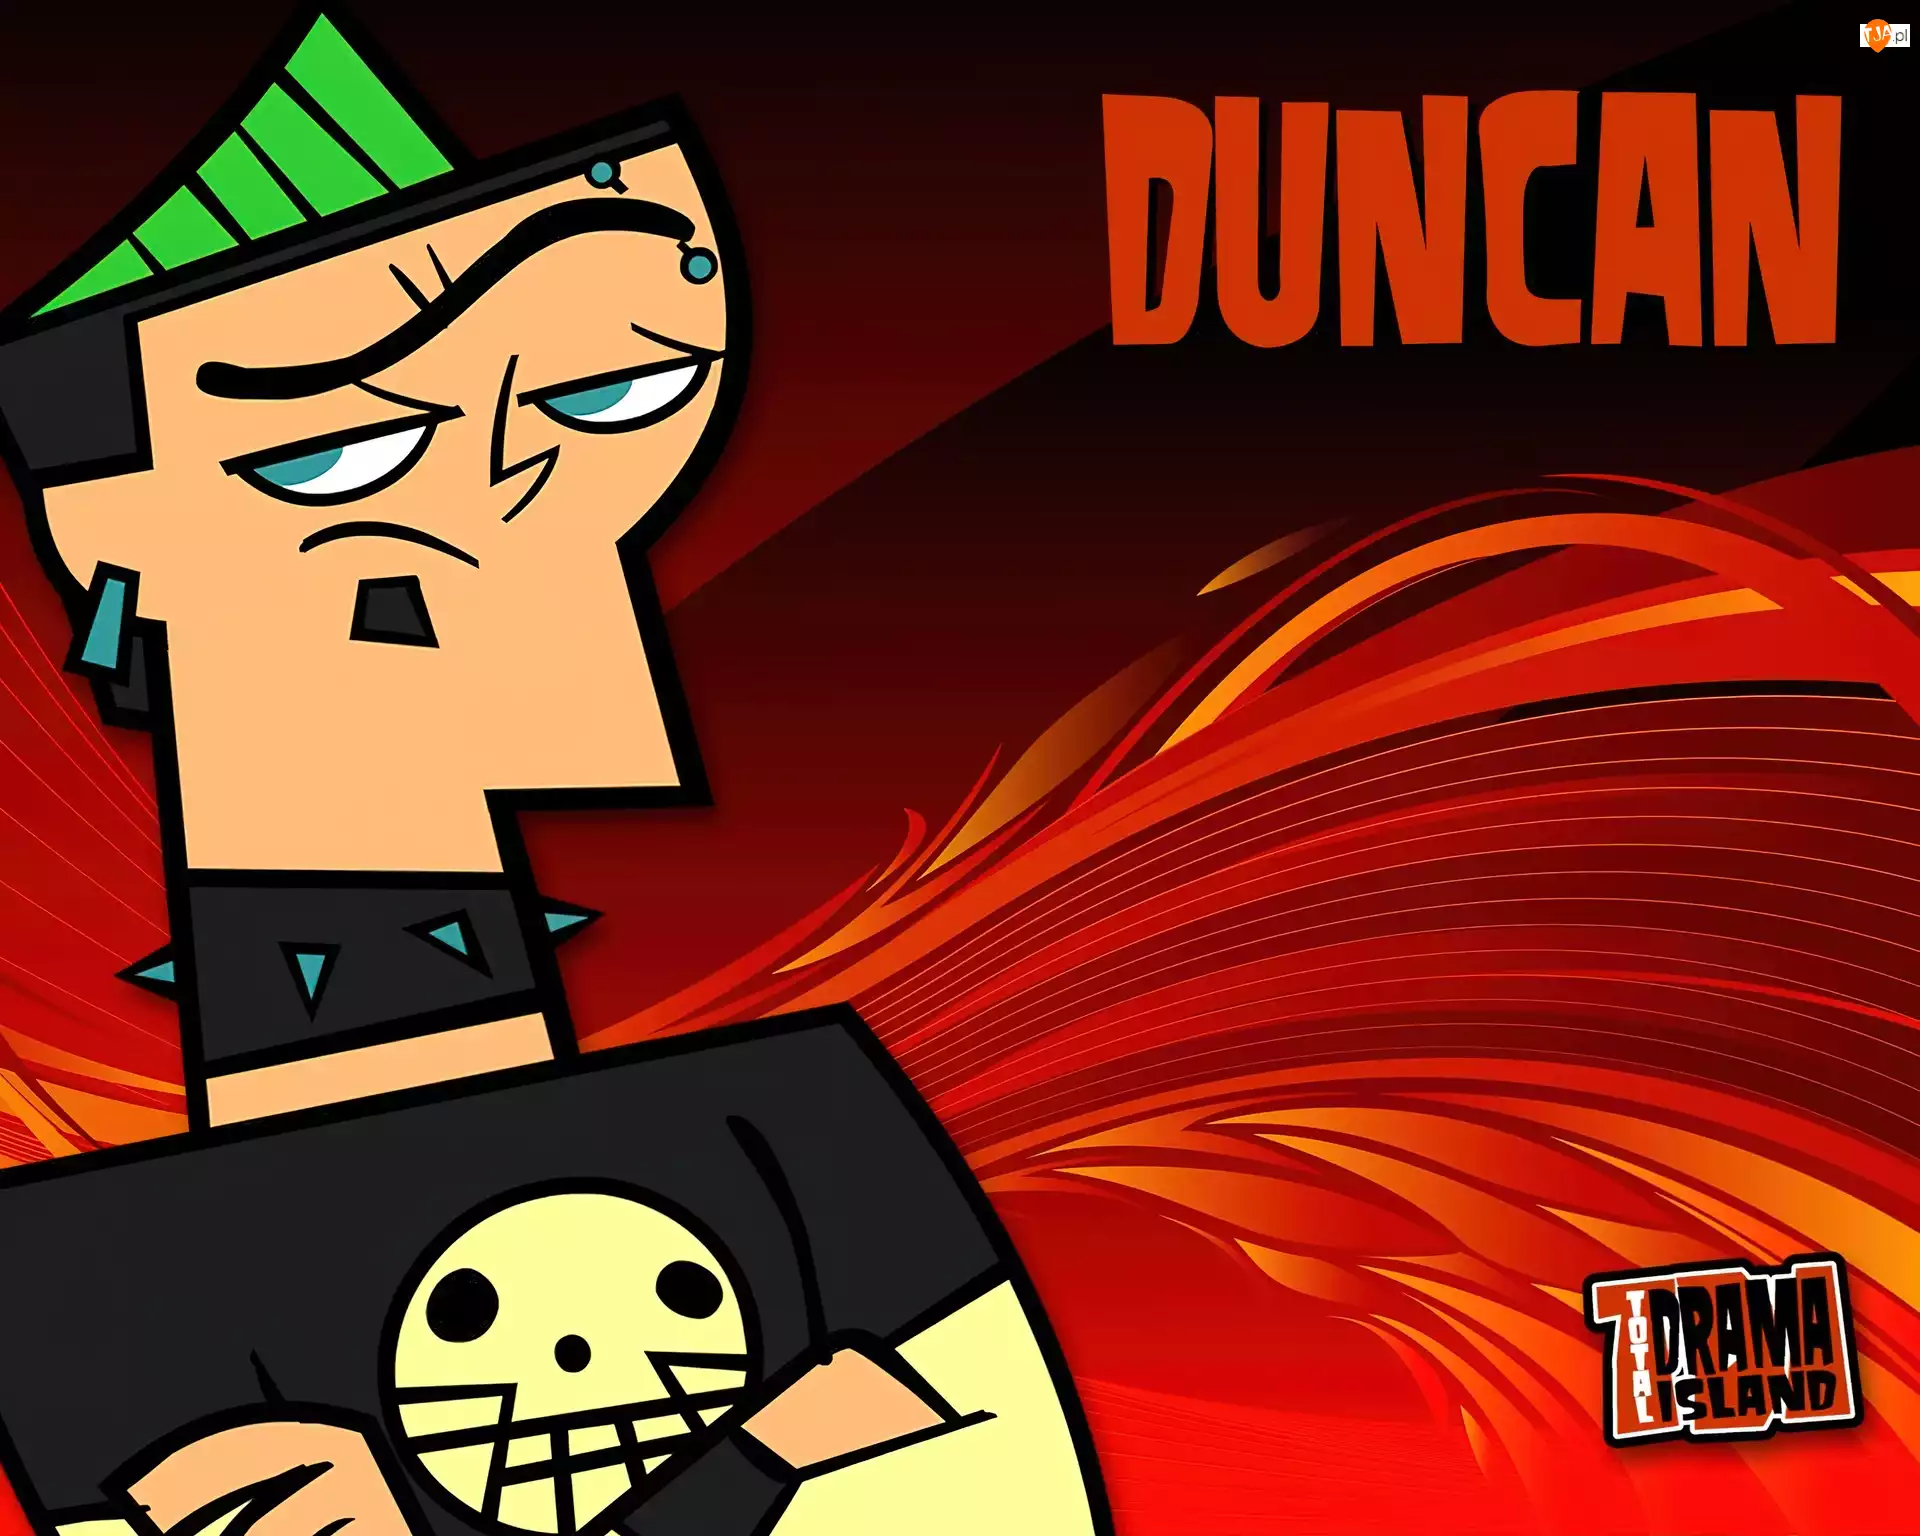 Duncan, Total Drama Island